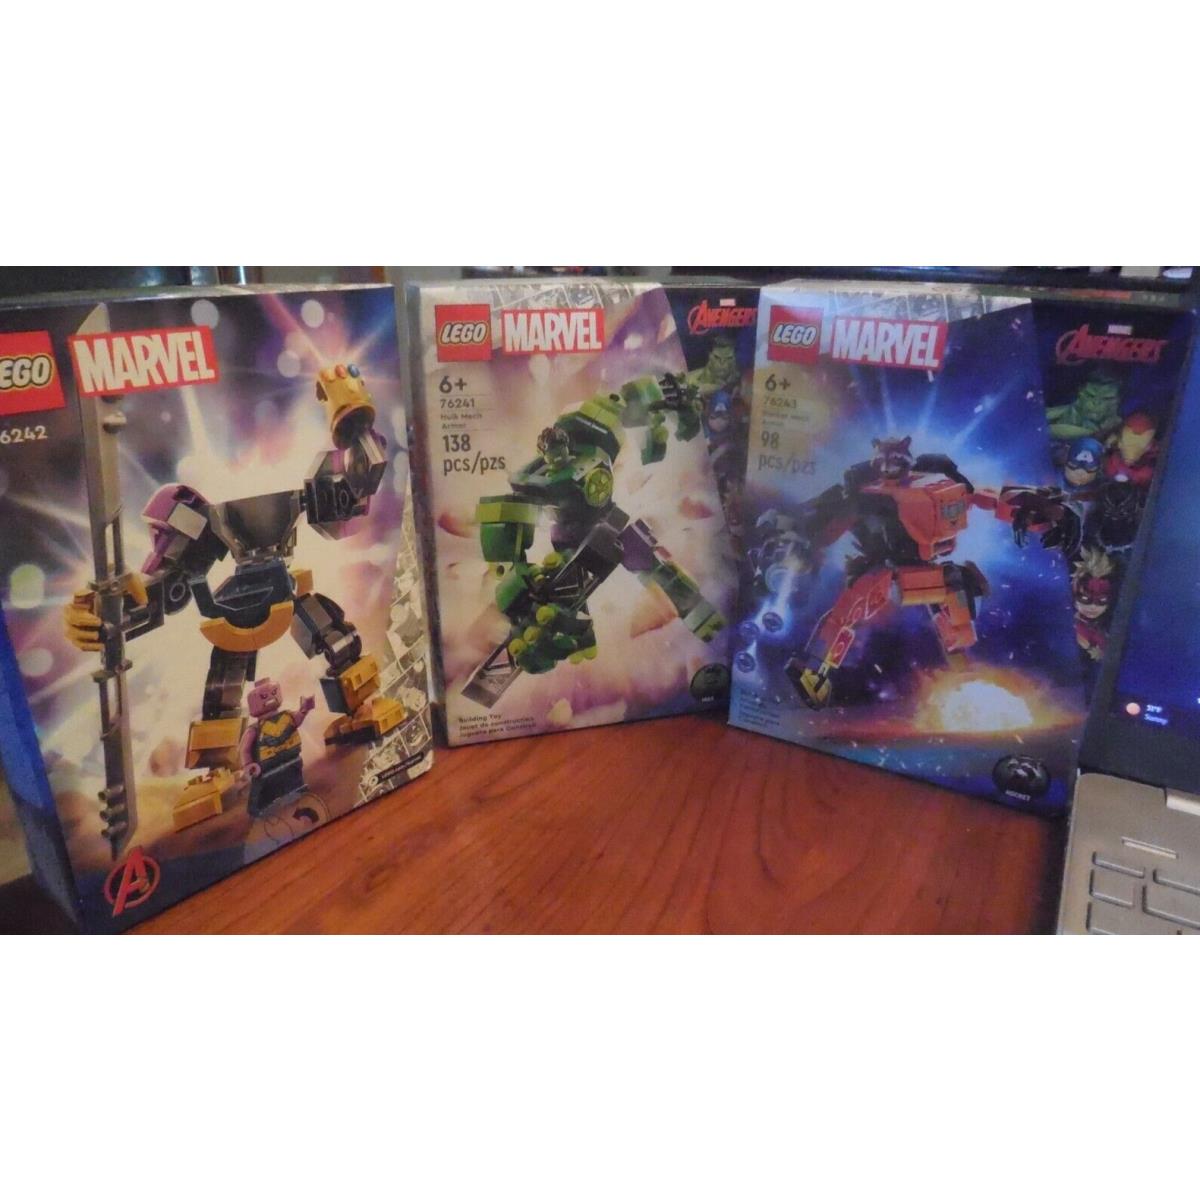 3-LEGO Marvel: Hulk 76241 Thomas 76242 Rocket 76243